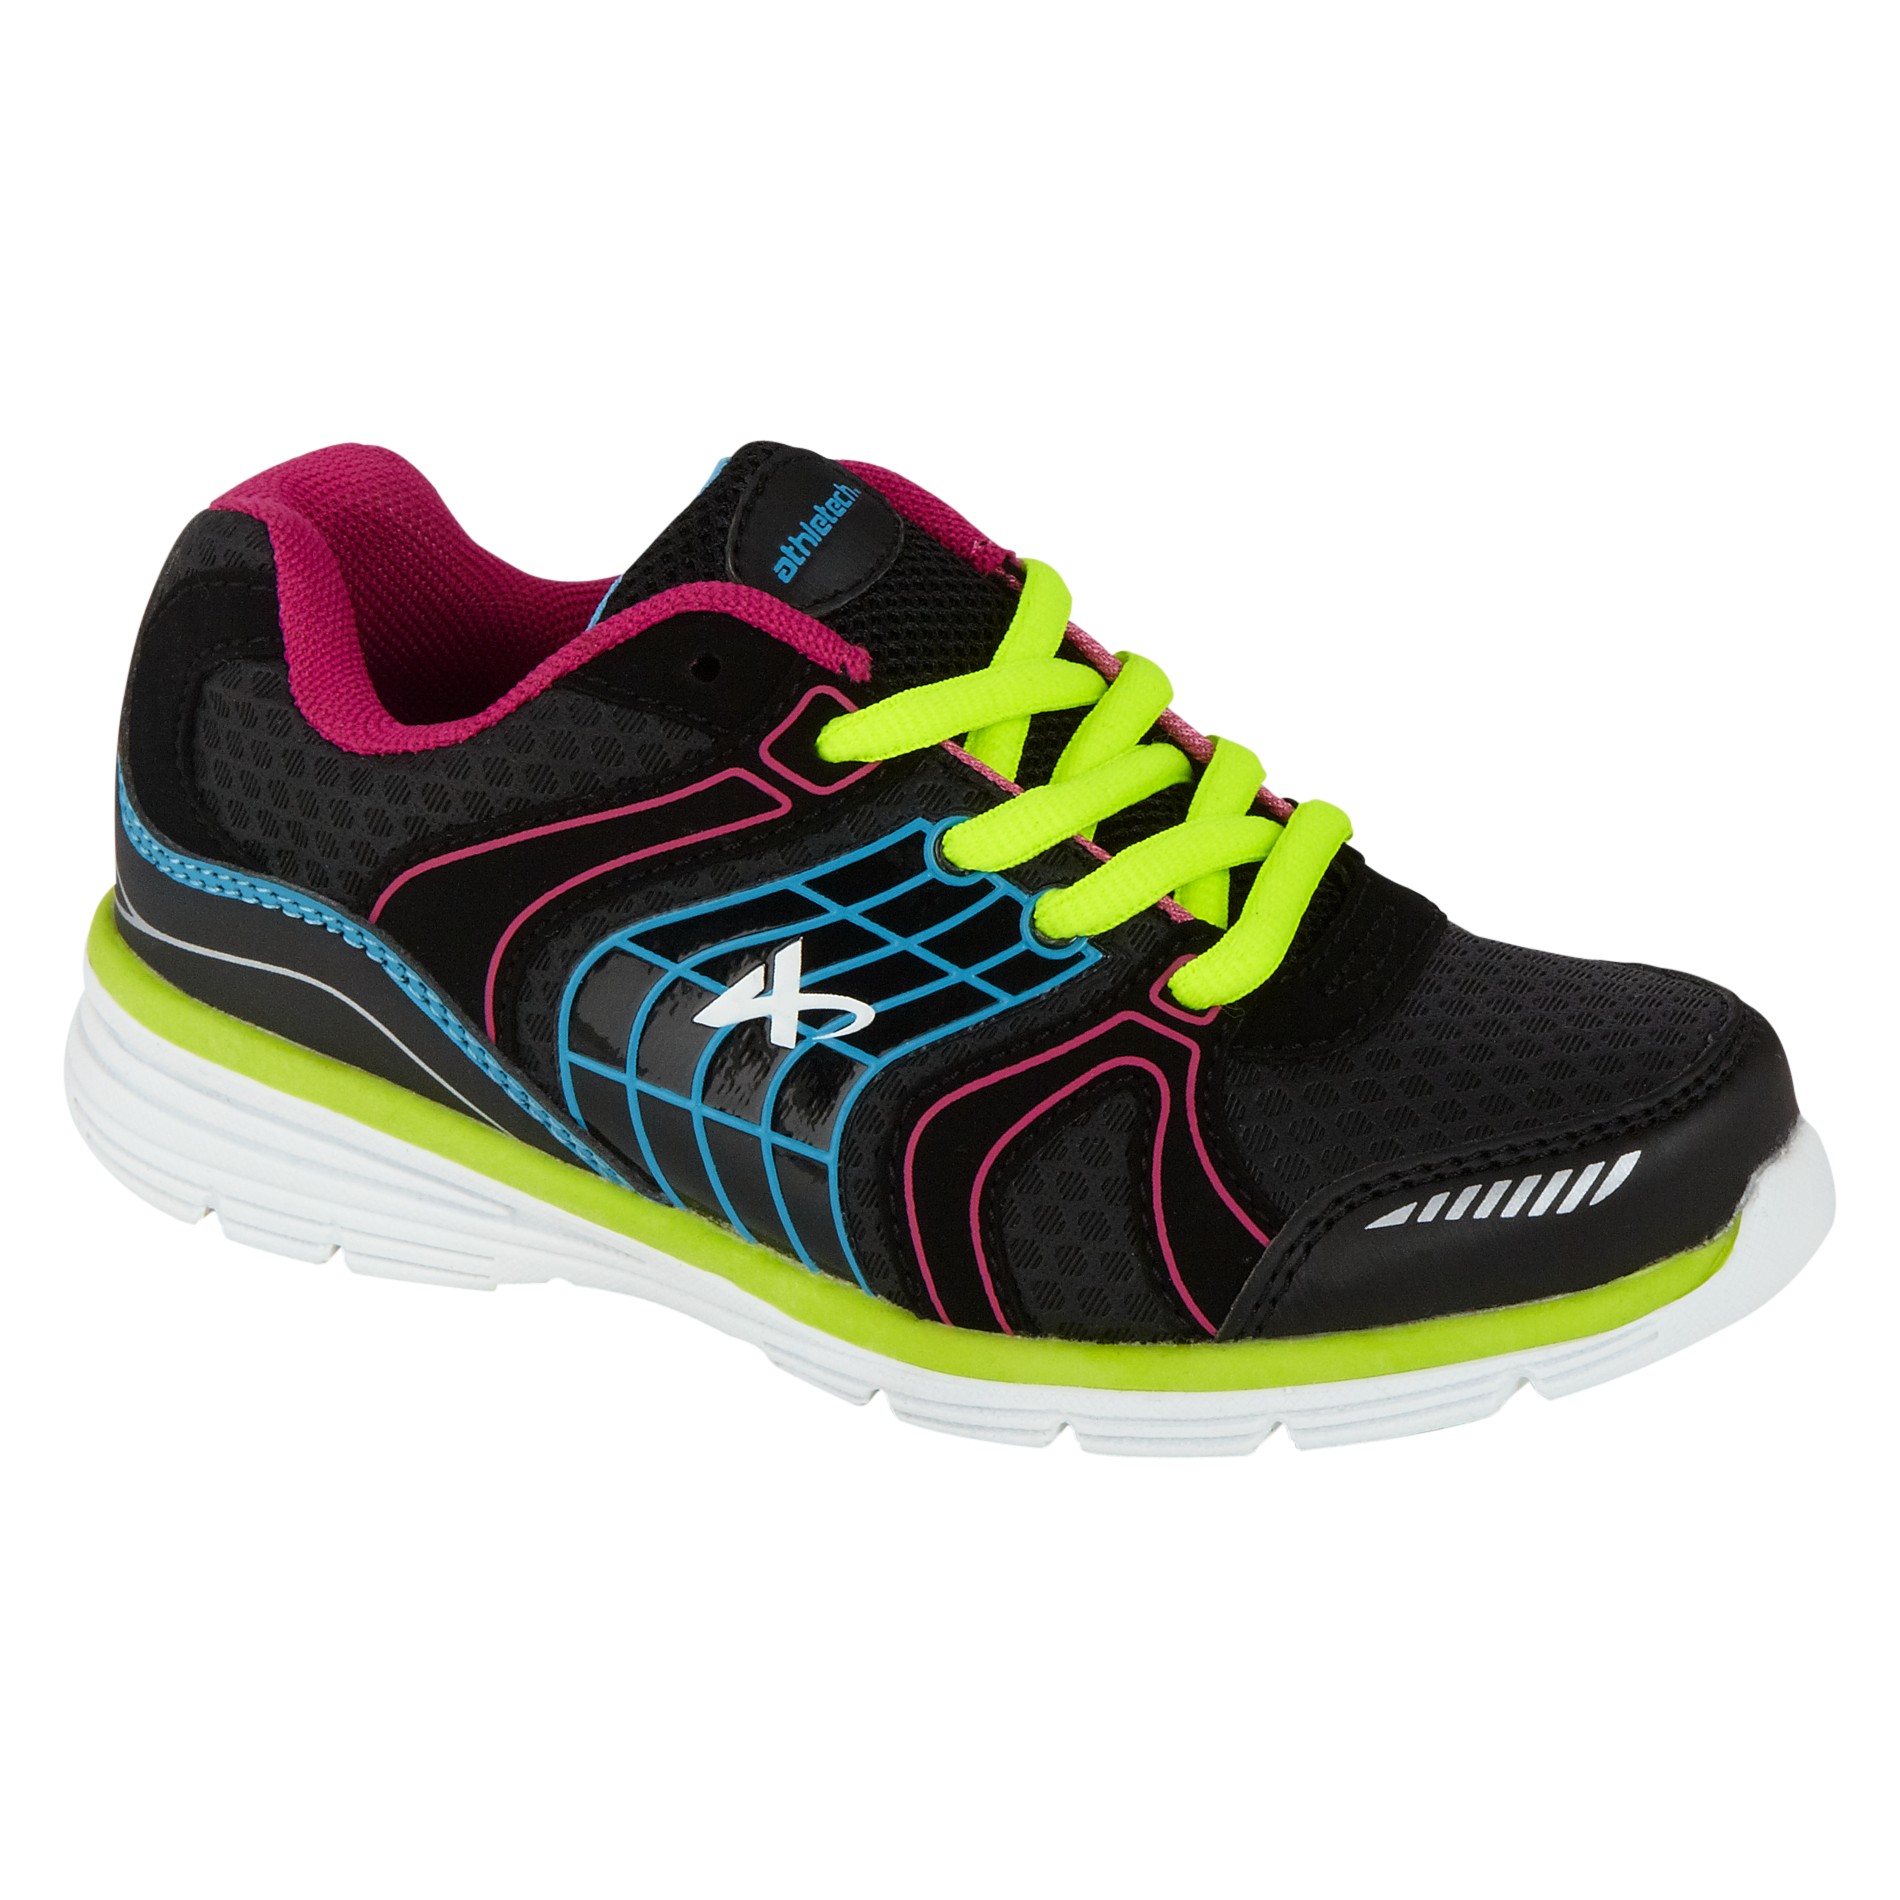 Athletech Girl's Willow 2 Athletic Shoe - Black/Multi